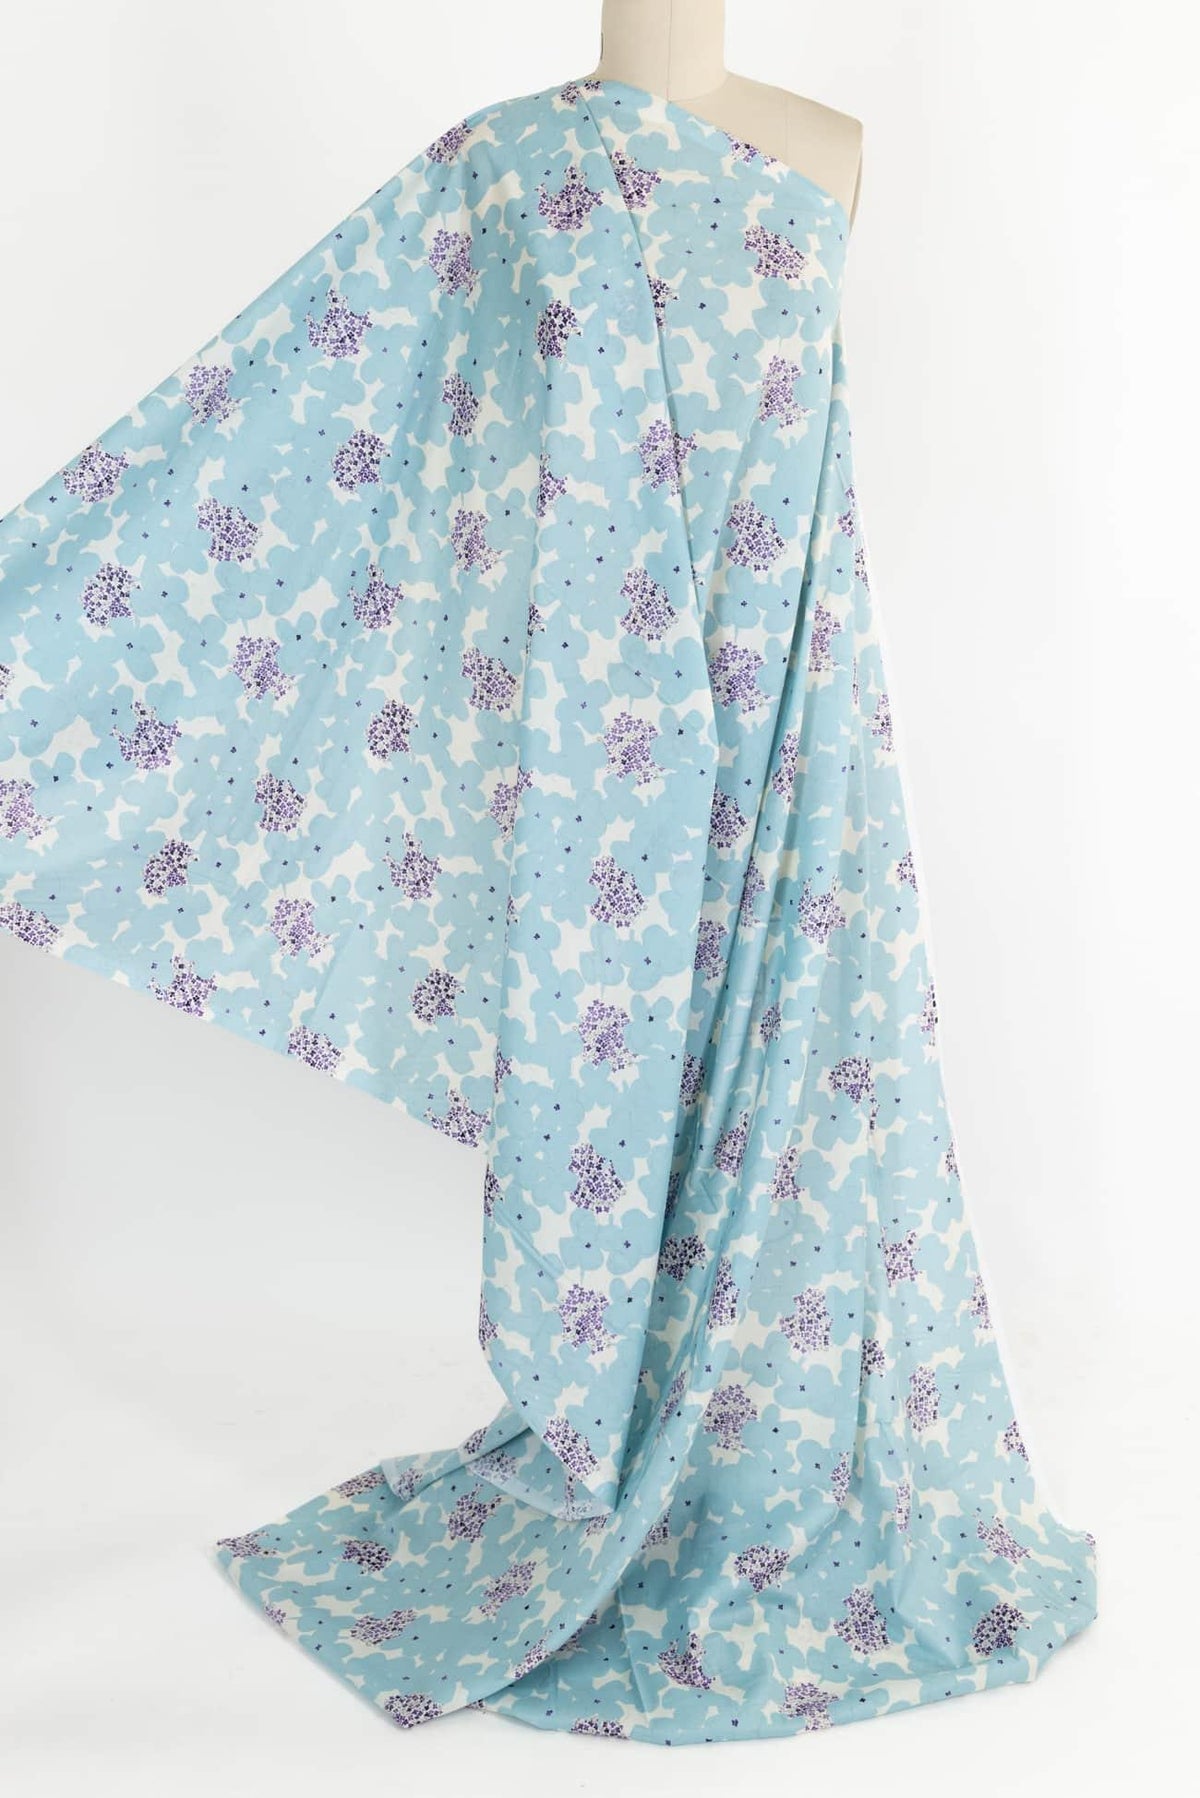 Sweet Violets Japanese Cotton Woven - Marcy Tilton Fabrics